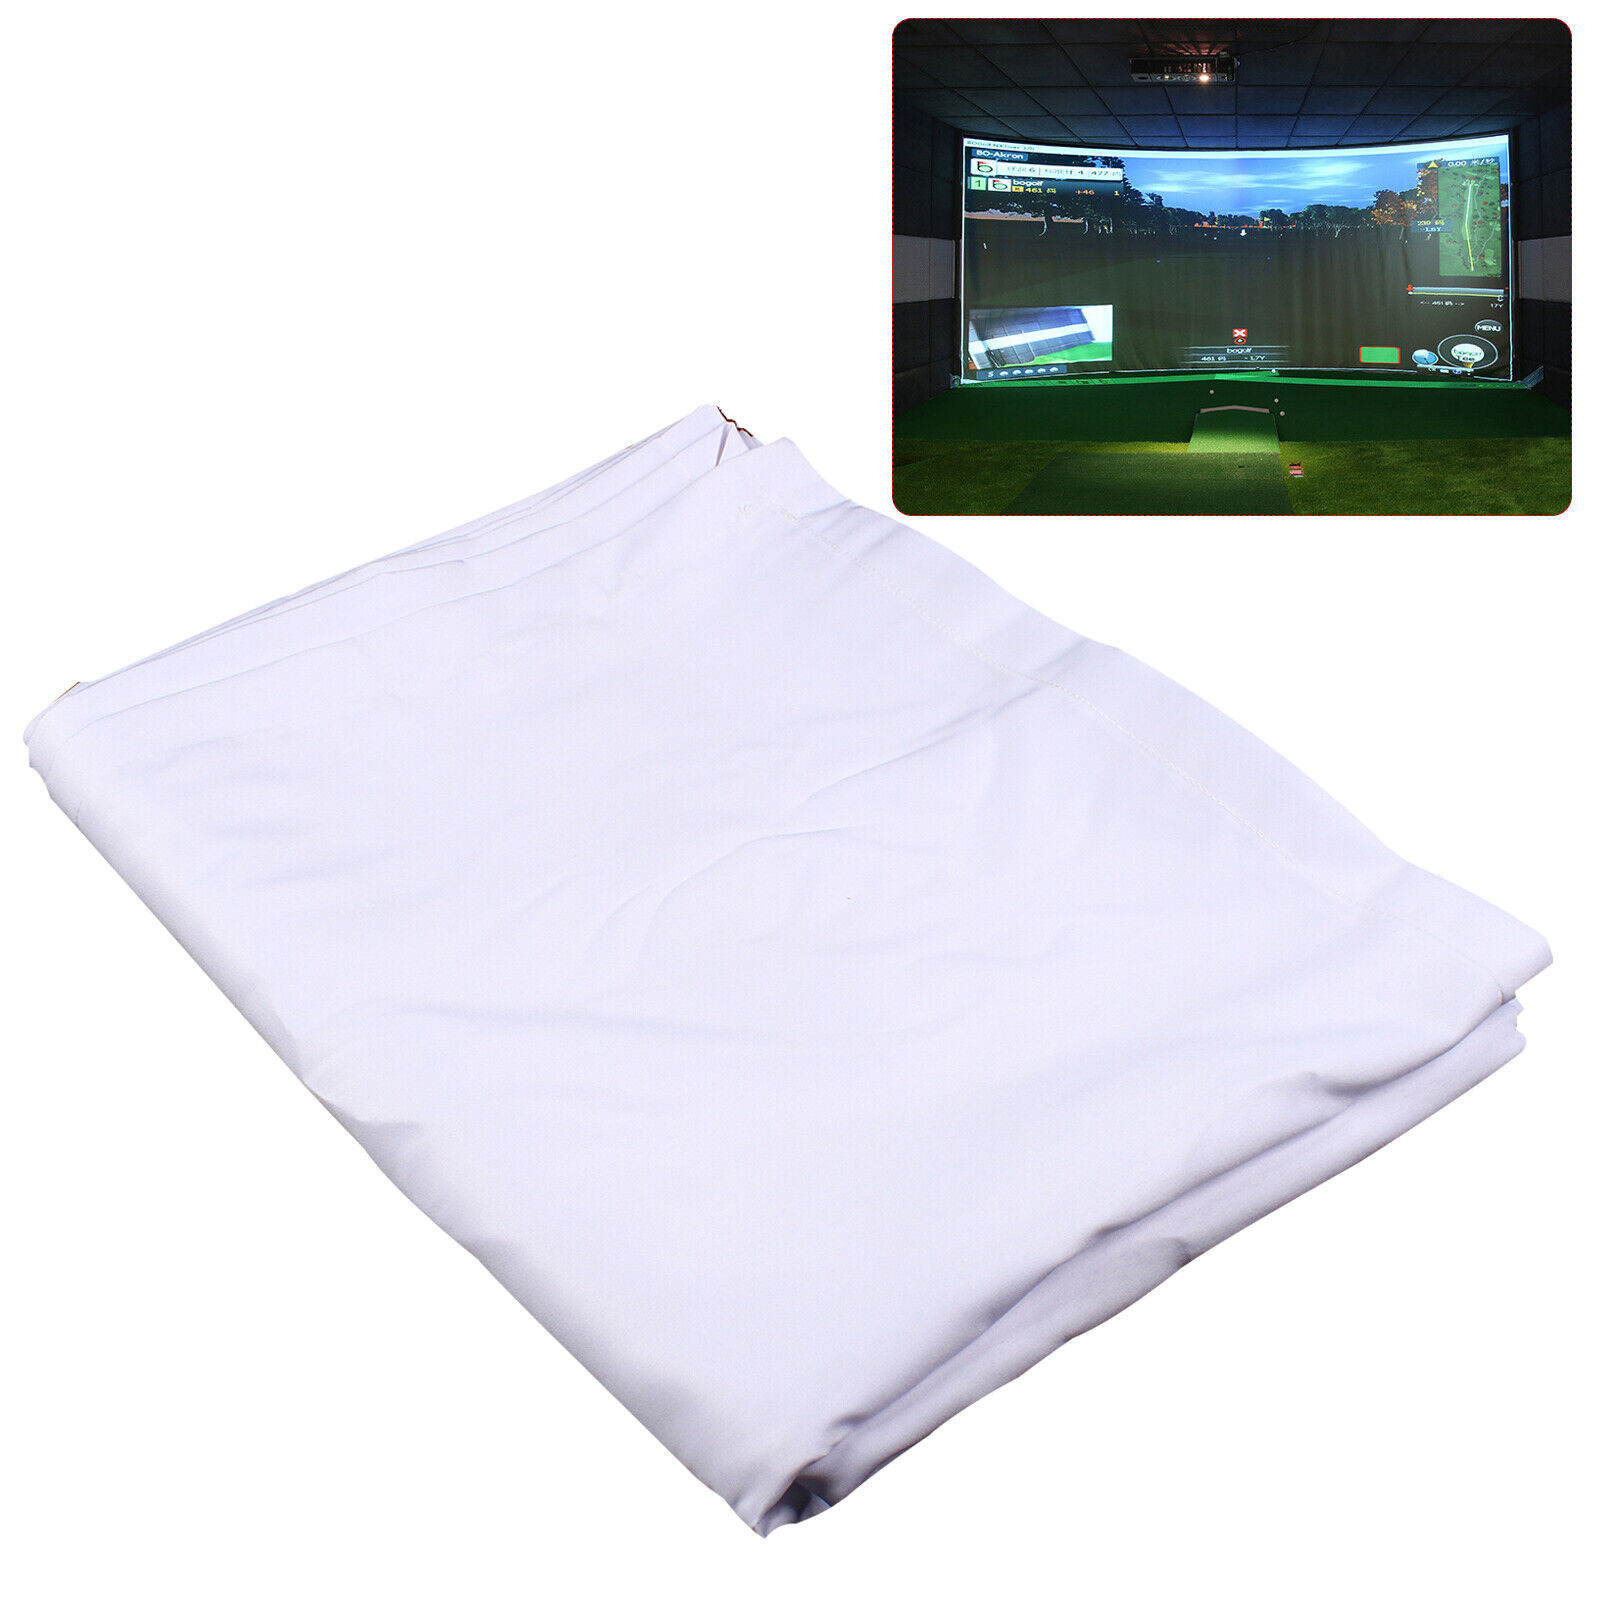 Golf Ball Simulator Impact Display Projection Zebra Screen 300*200cm White Top